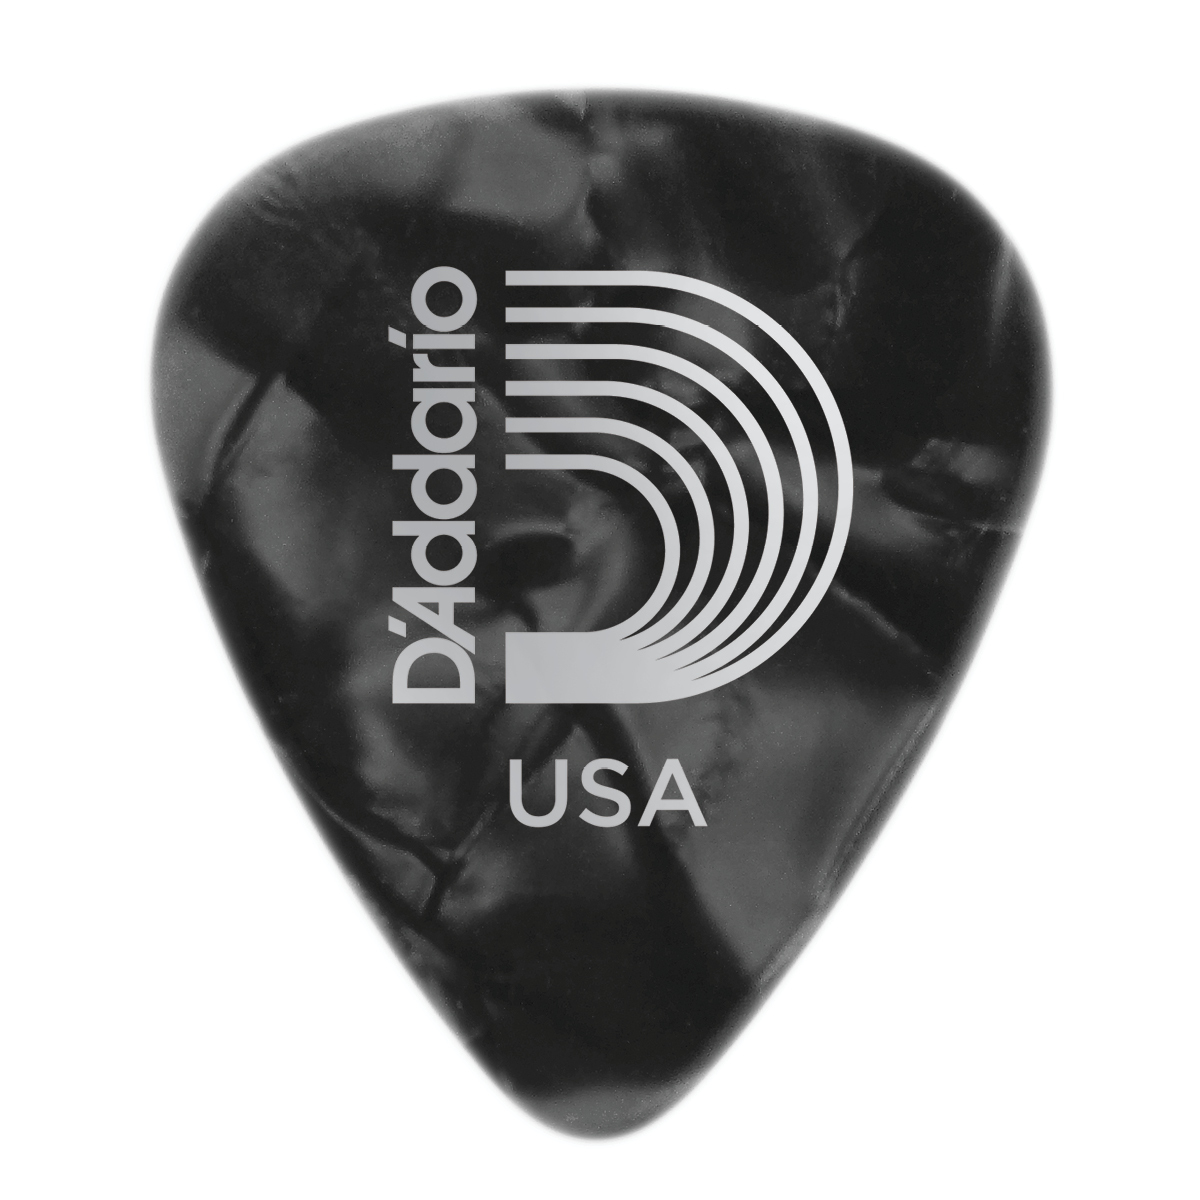 D'Addario Black Pearl Celluloid Guitar Pick, Heavy